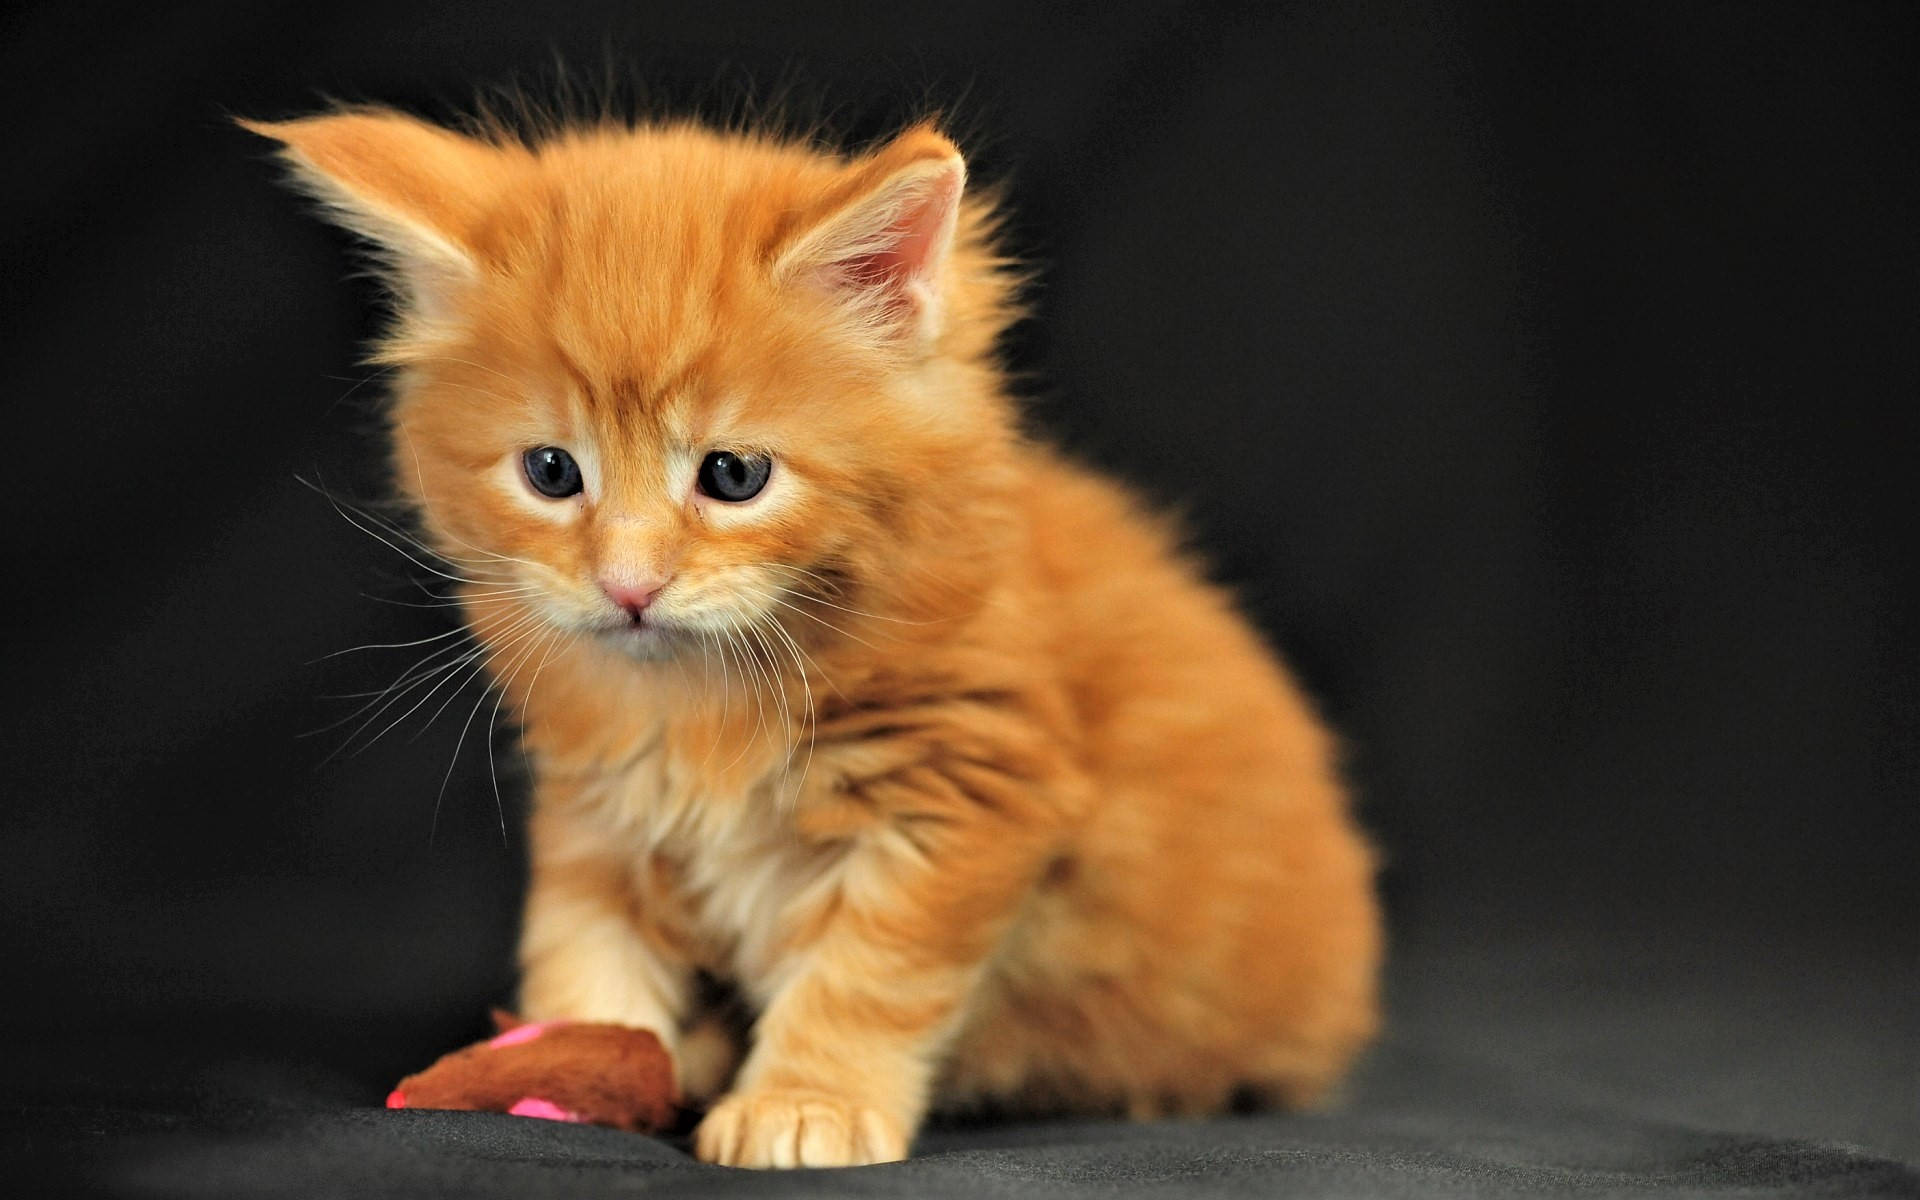 Orange-colored Cute Kitten